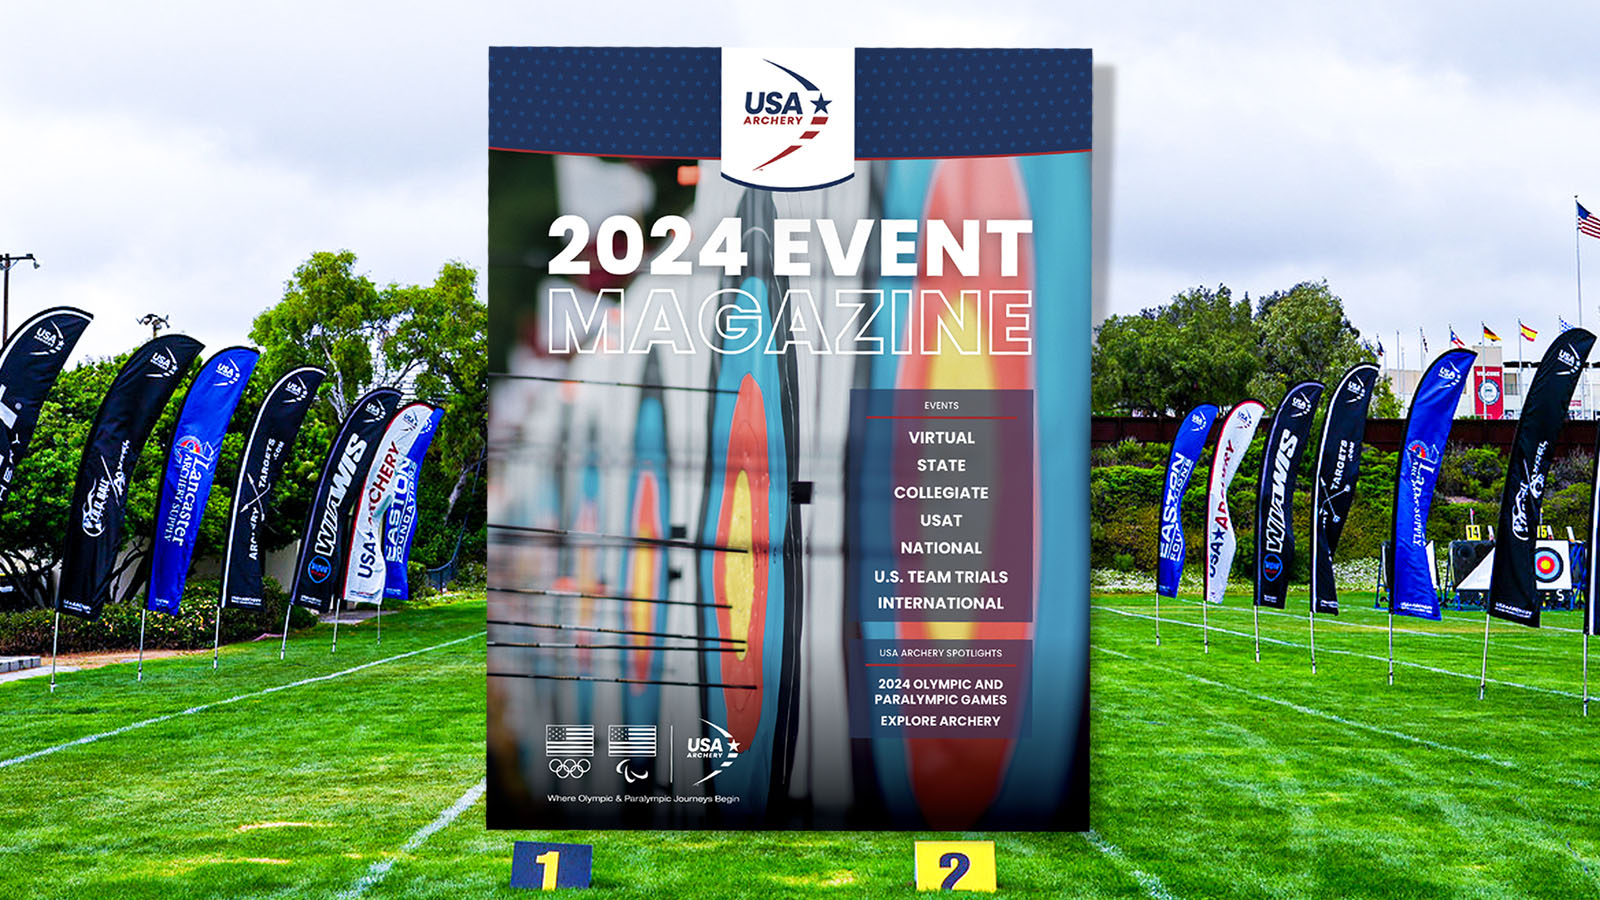 Introducing the USA Archery 2024 Event Magazine